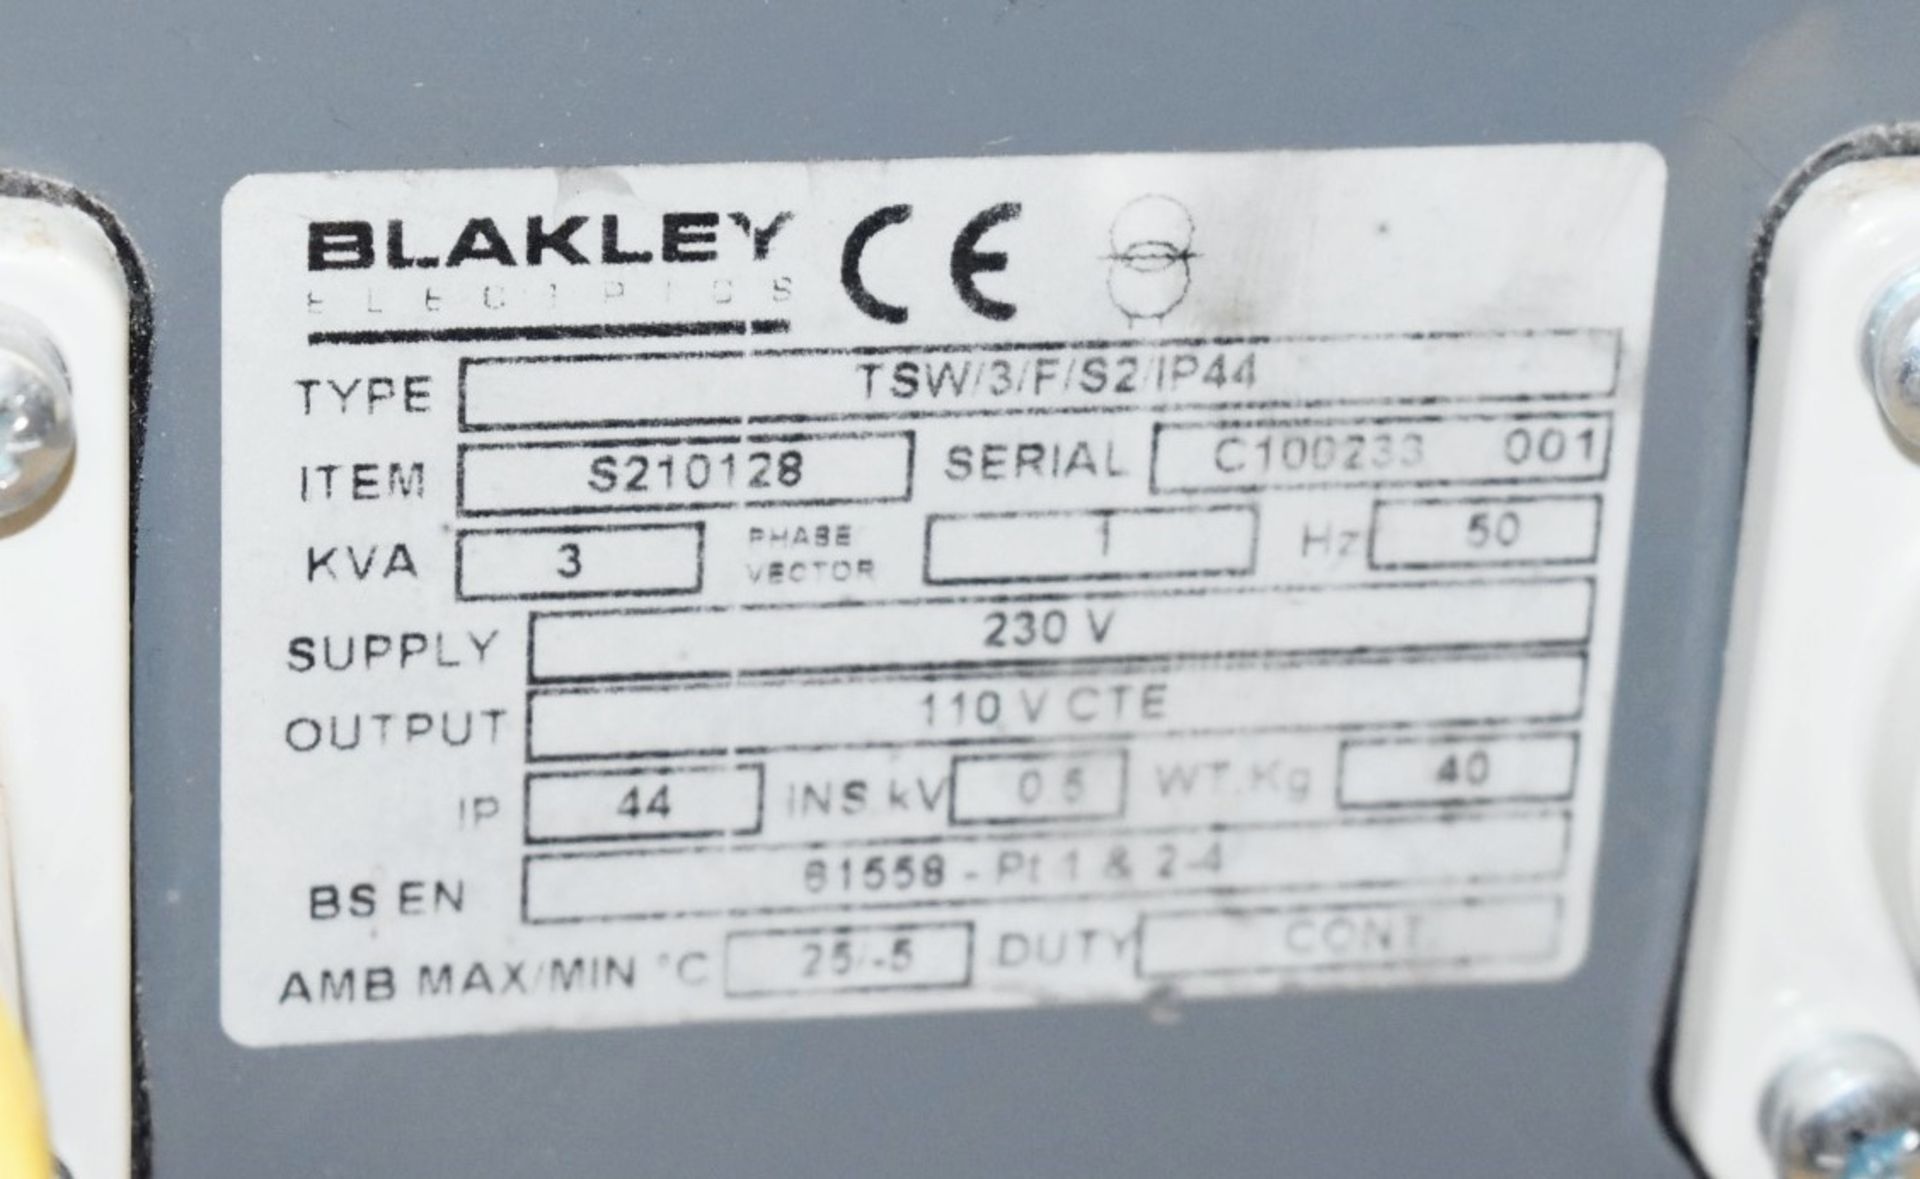 1 x Blakley 110v Site Power and Lighting Transformer - Single Phase 240v to 110v - Type: S21028 - Image 4 of 7